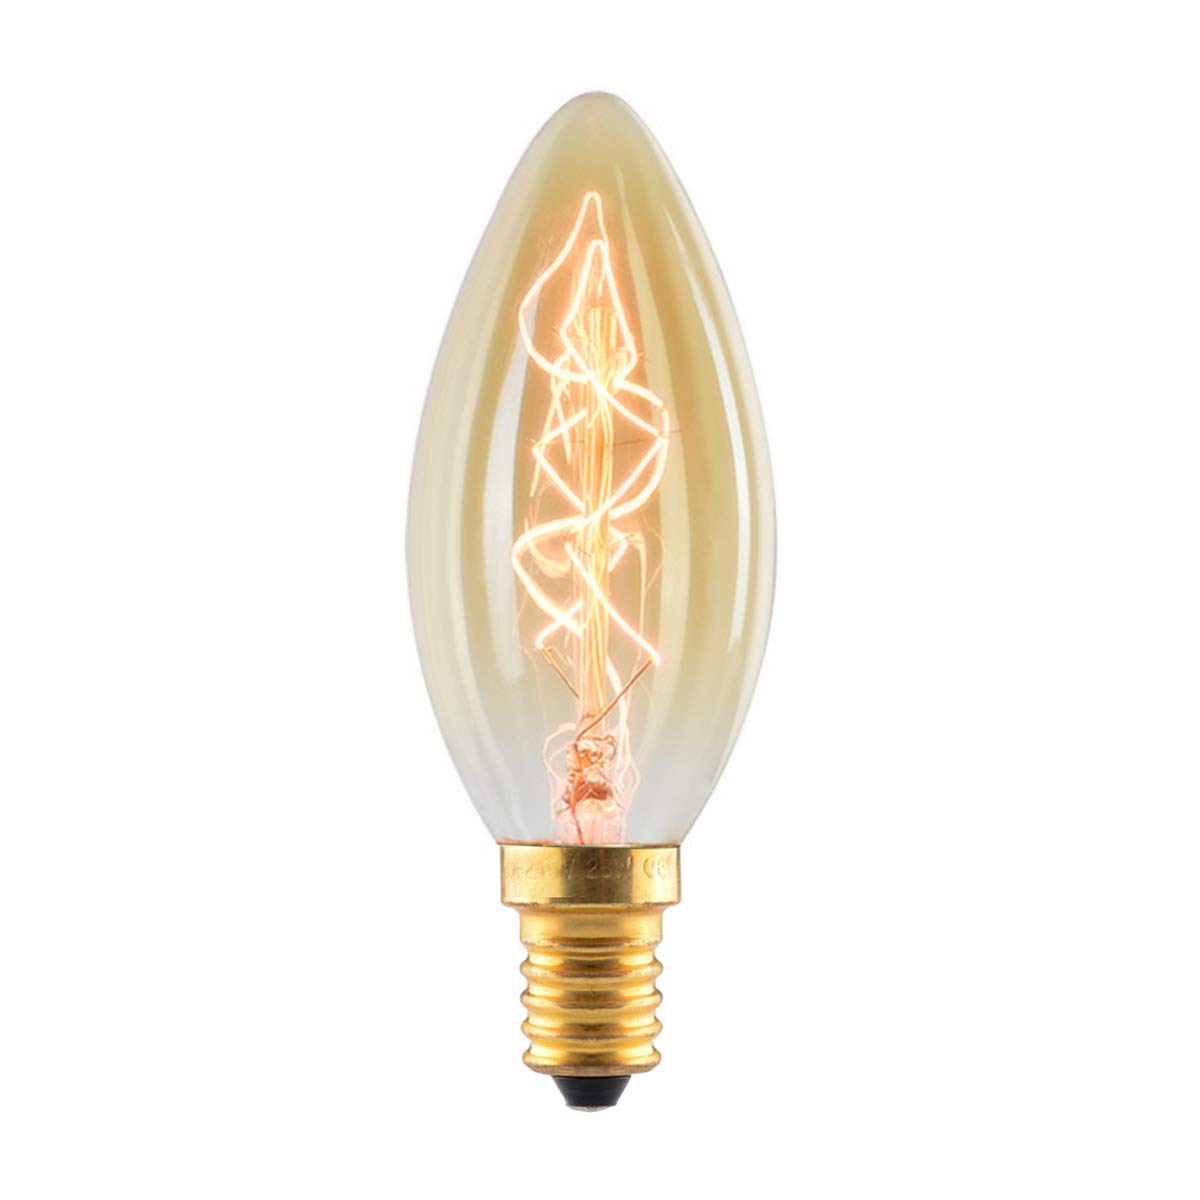 Vintage Edison Screw Candle Bulbs 4̣0̣Ẉạṭṭ - 6 Pack Dimmable E14 SES Small Screw Bulbs, Decorative Filament Bulbs, Warm White 2700K